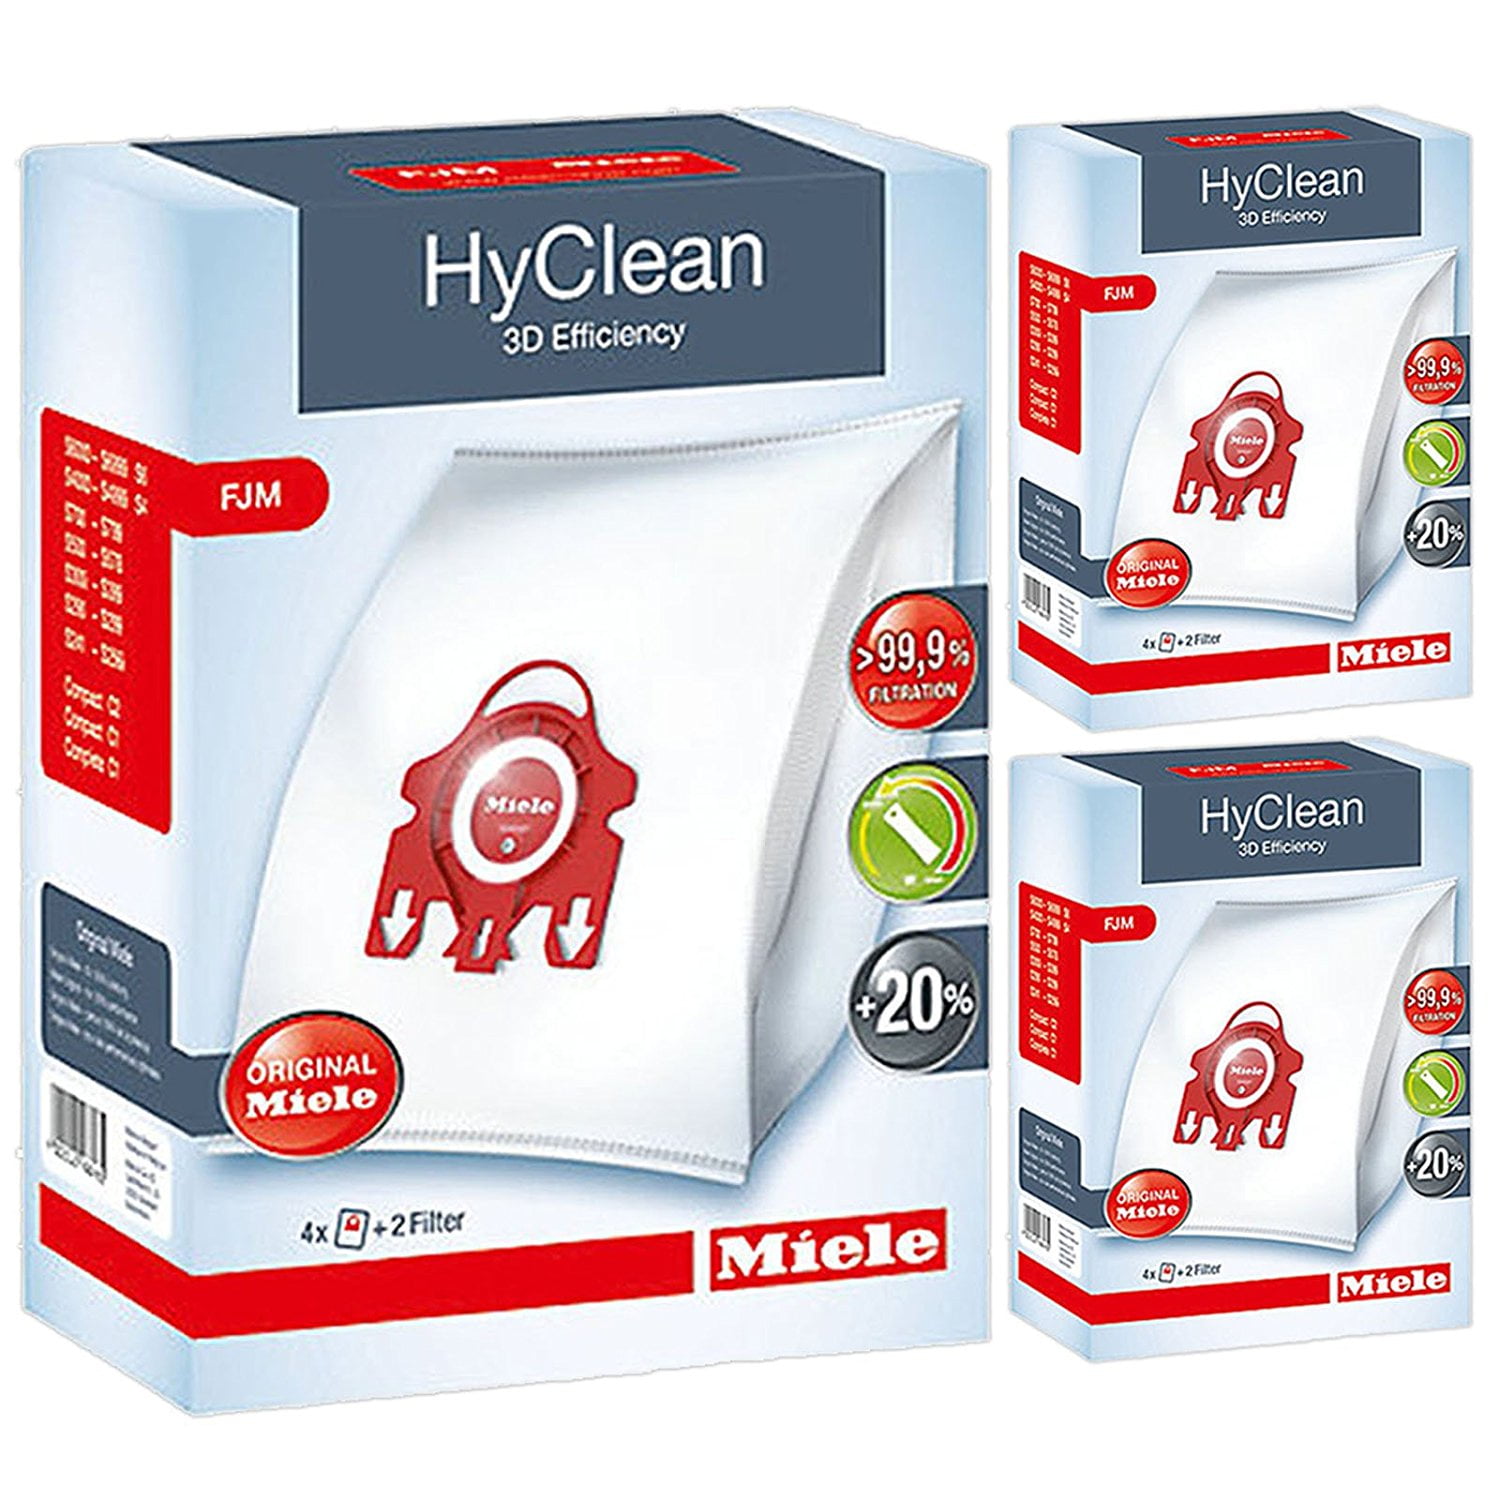 2 X Miele AirClean/Hyclean 3D Efficiency Dust Bag 8 Bags & 4 Filters Type FJM 